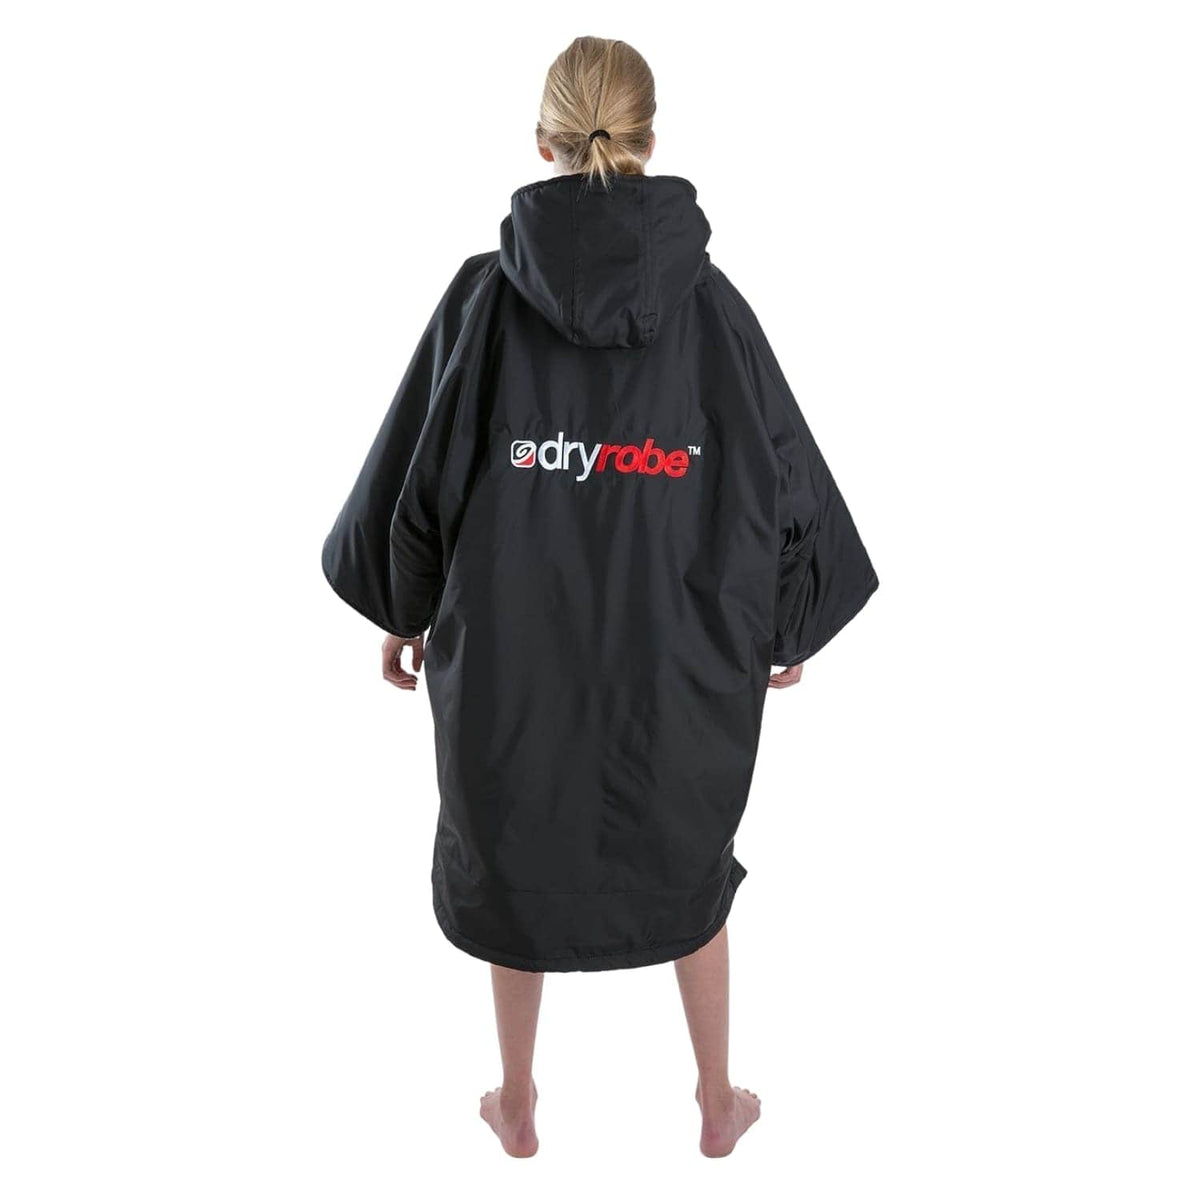 Dryrobe Kids Advance Short Sleeve Drying &amp; Changing Robe Black Grey - Changing Robe Poncho Towel by Dryrobe 10-14 Years